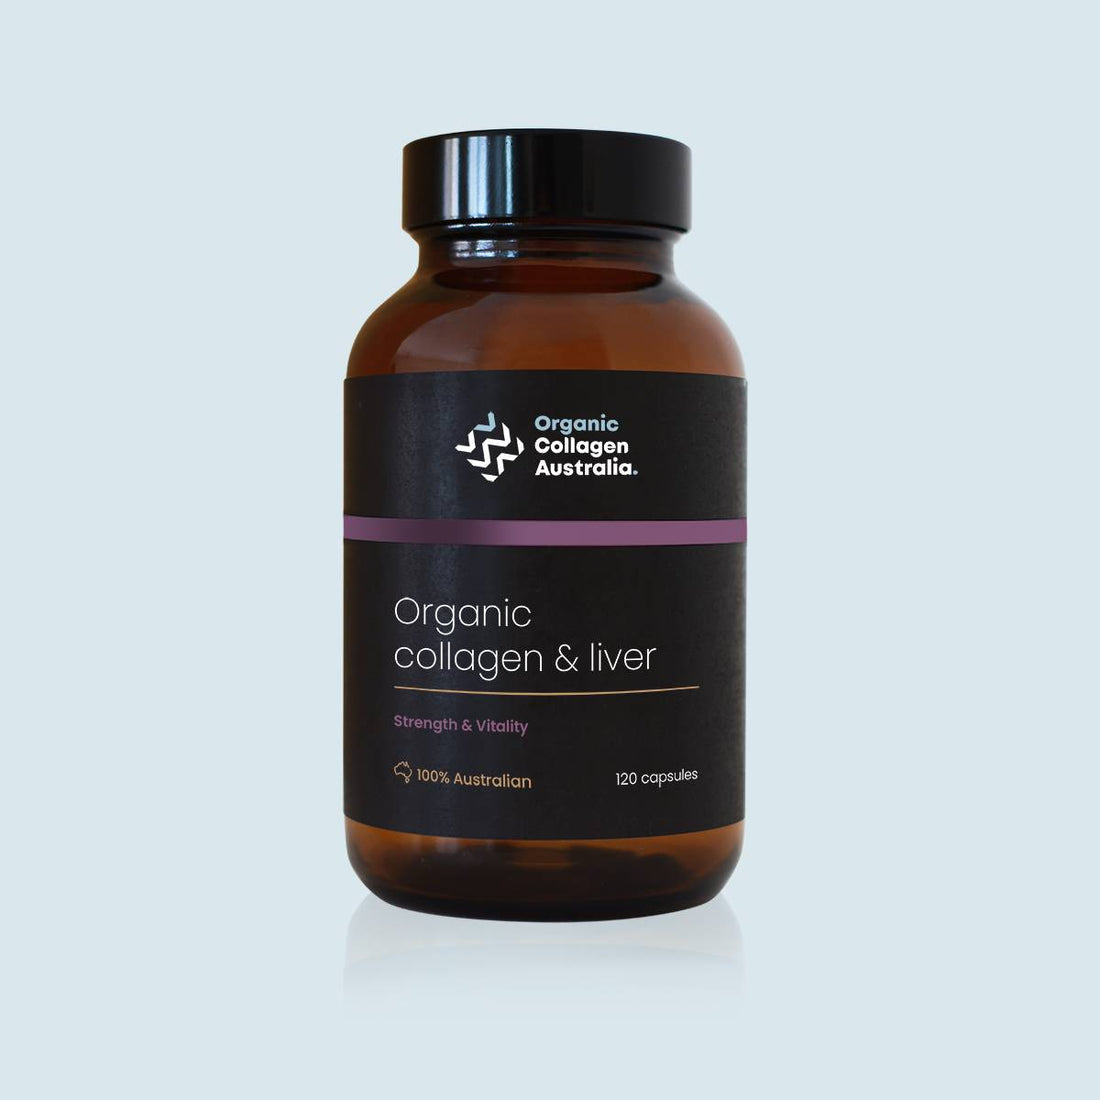 Organic Collagen Australia Organic Collagen & Liver 120 Capsules (Strength & Vitality)